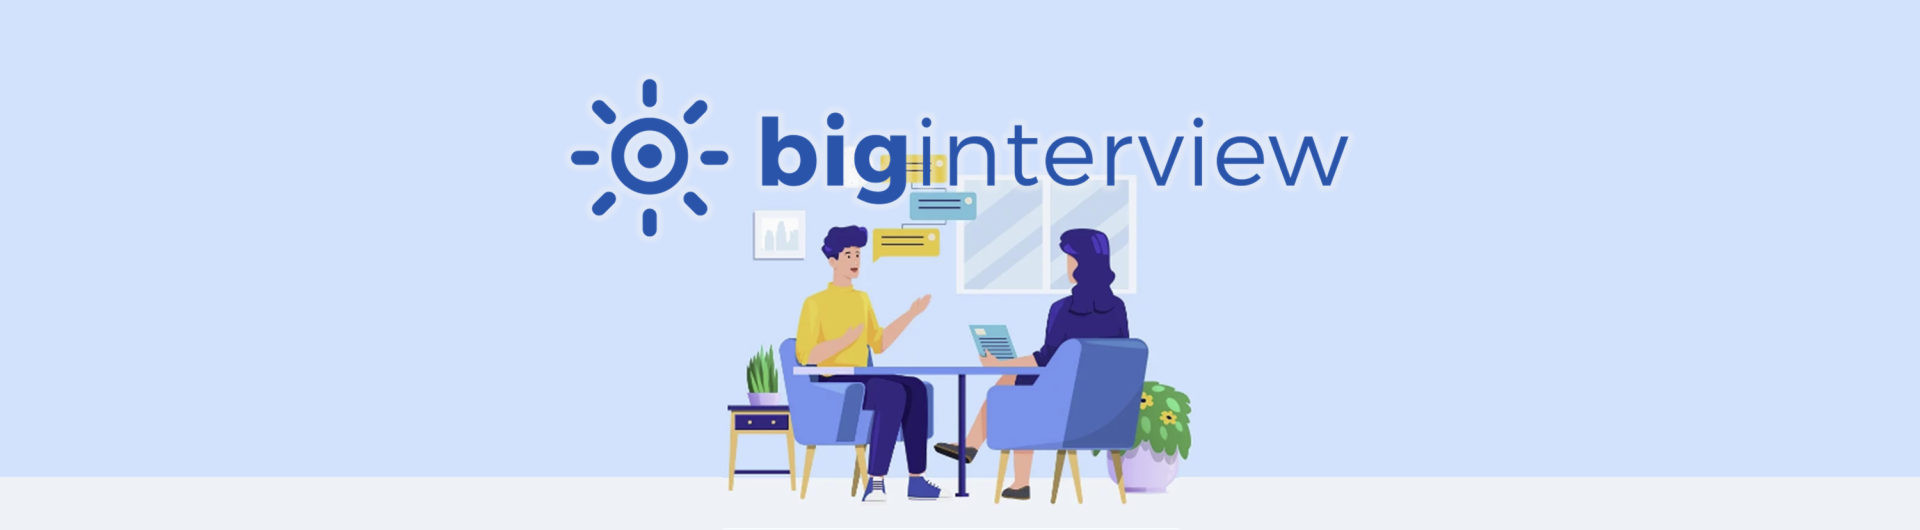 dsa_cdc_banner_students_big-interview